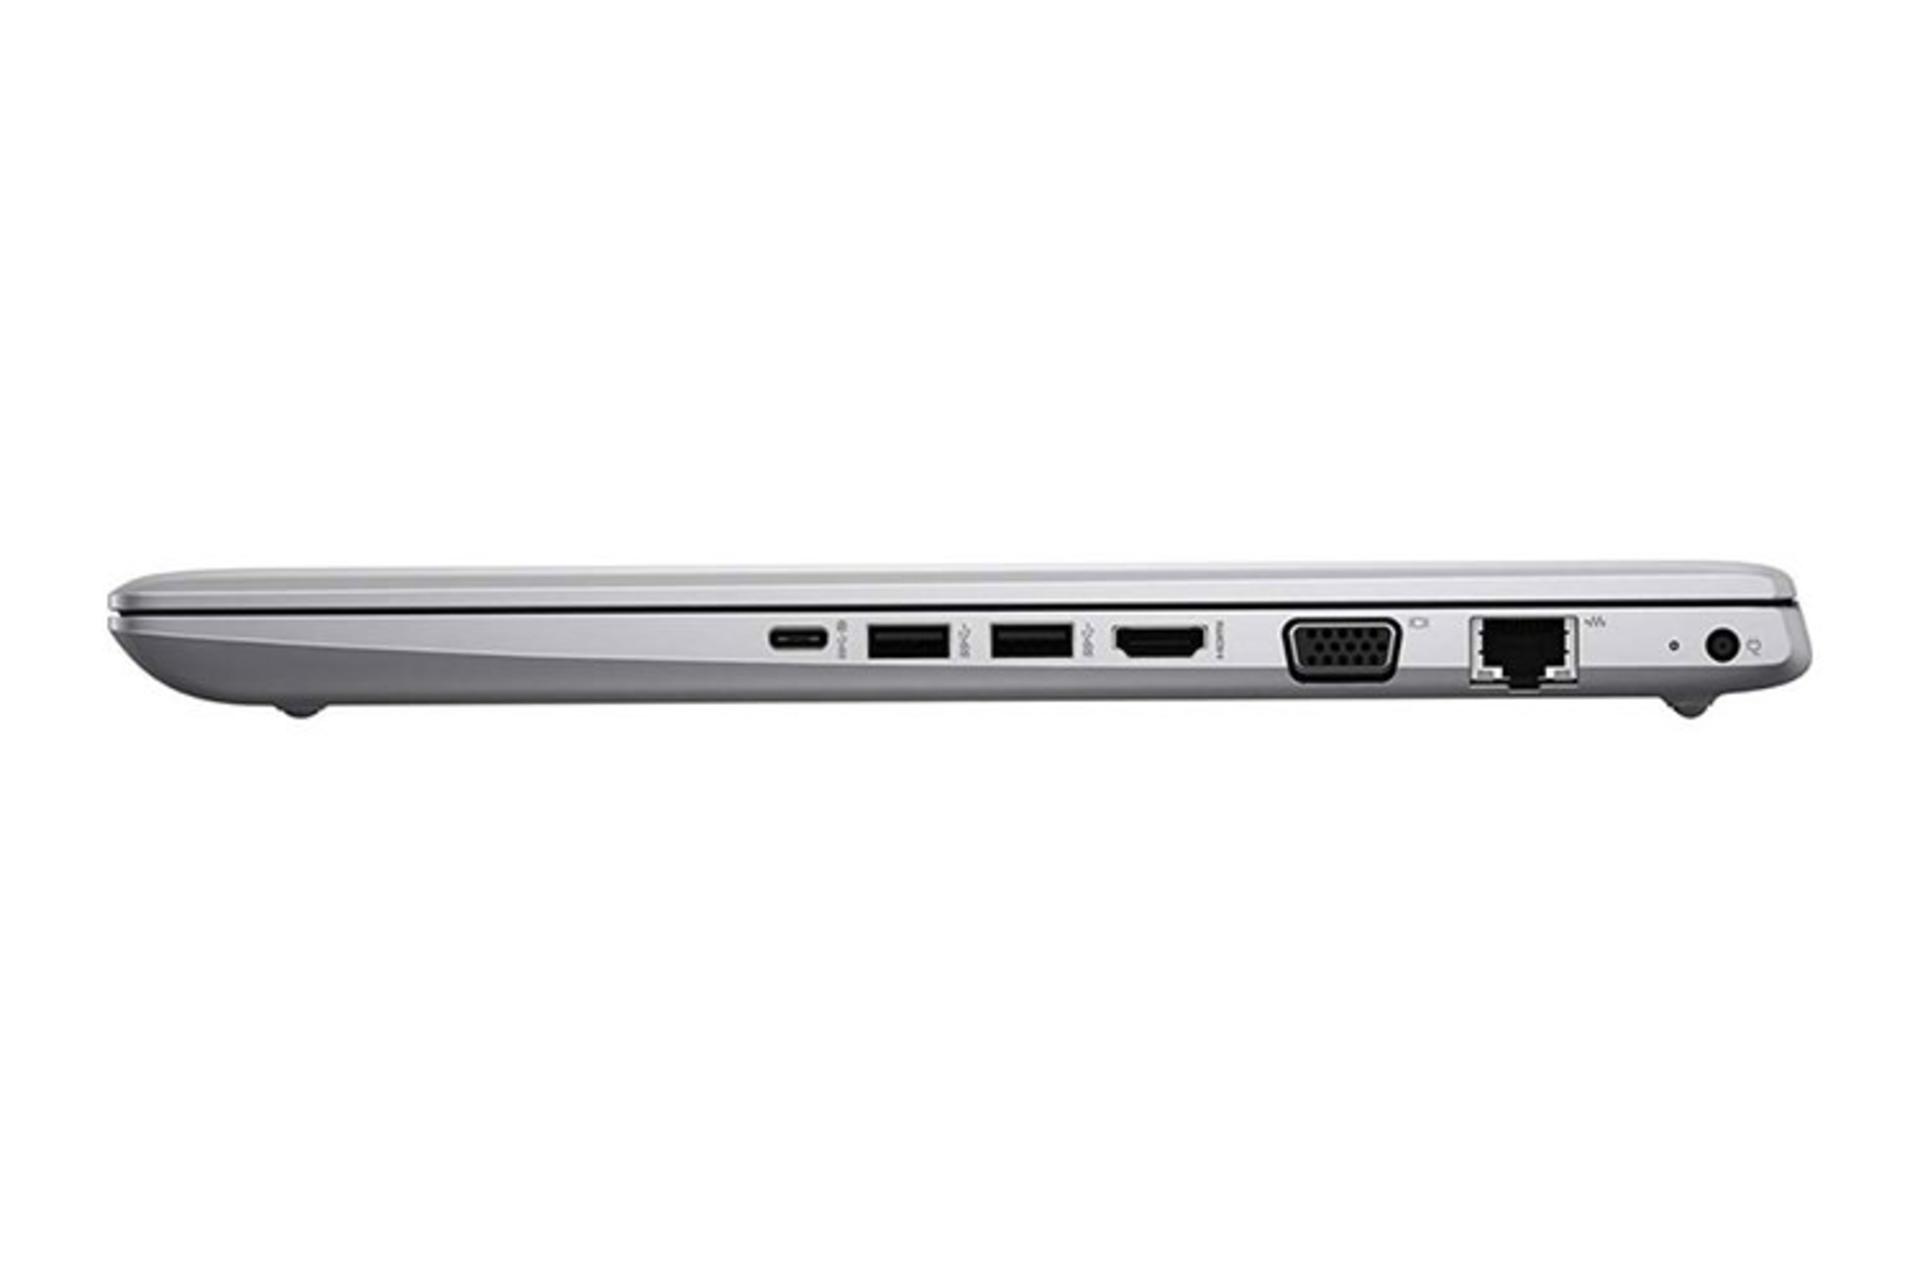 HP ProBook 450 G5 - D